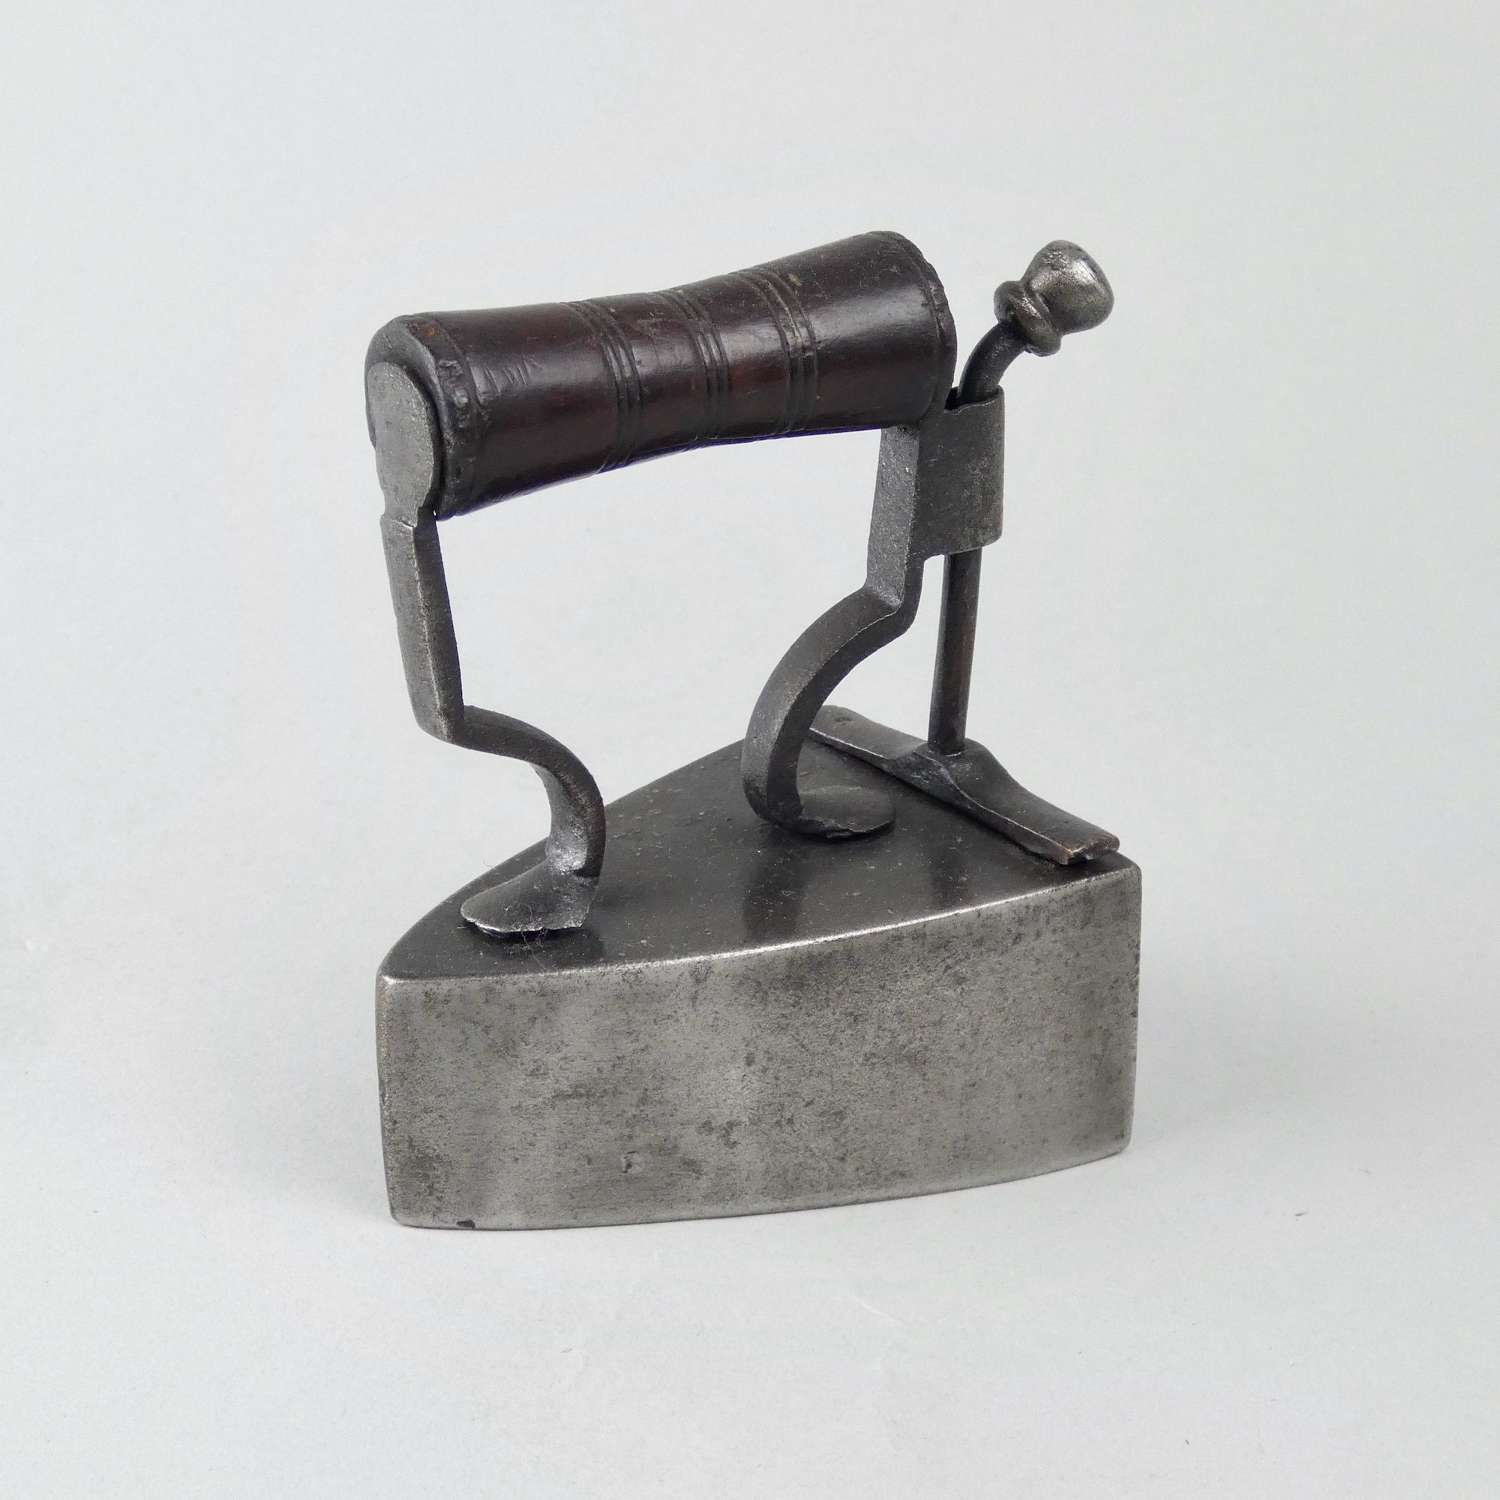 Small box iron by 'J BATES'